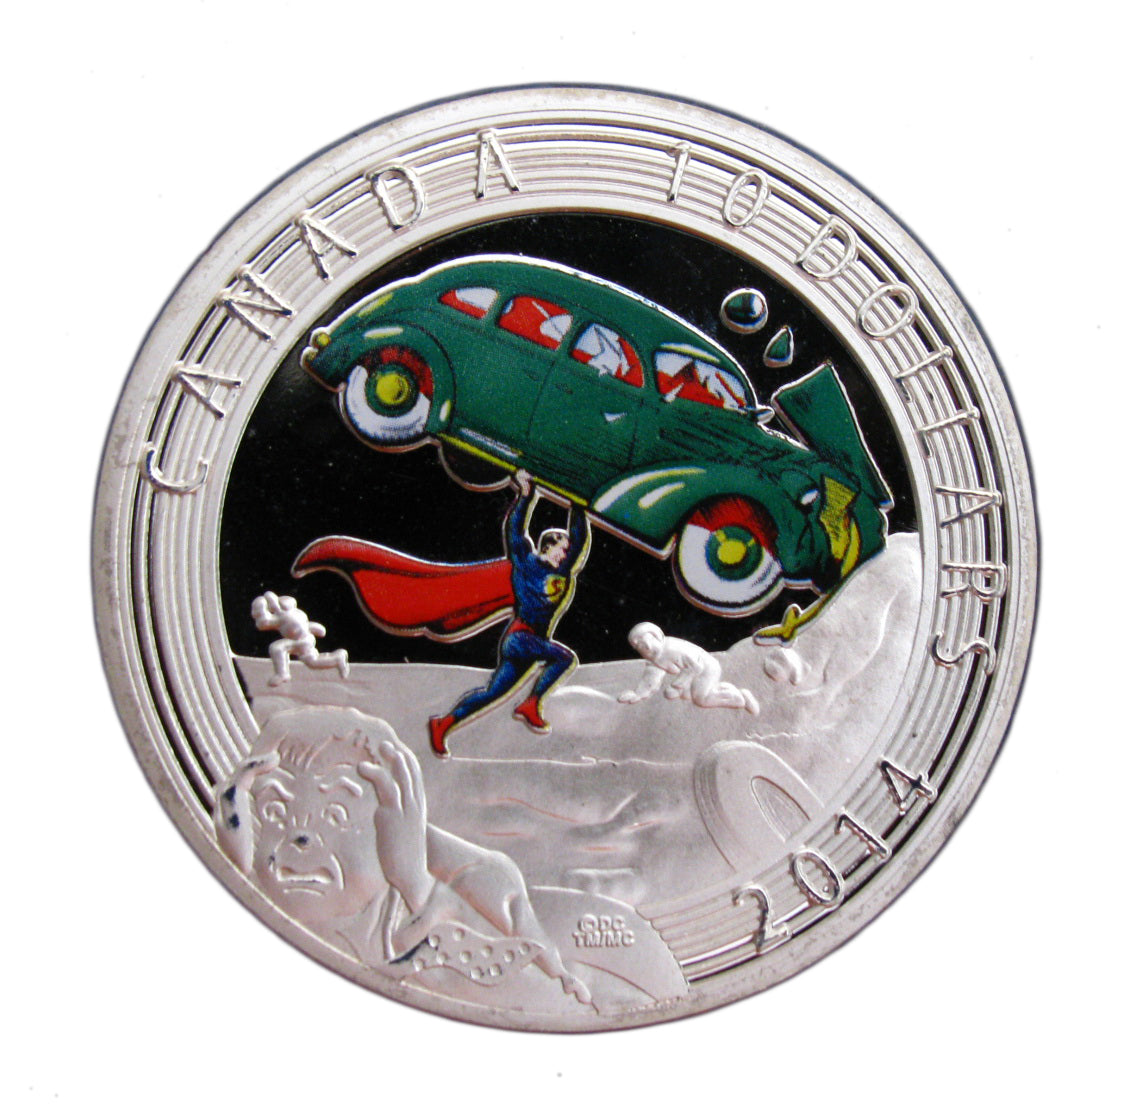 A Set of 4 Pieces 2014 Superman Cartoon Comic Commemorative Coins